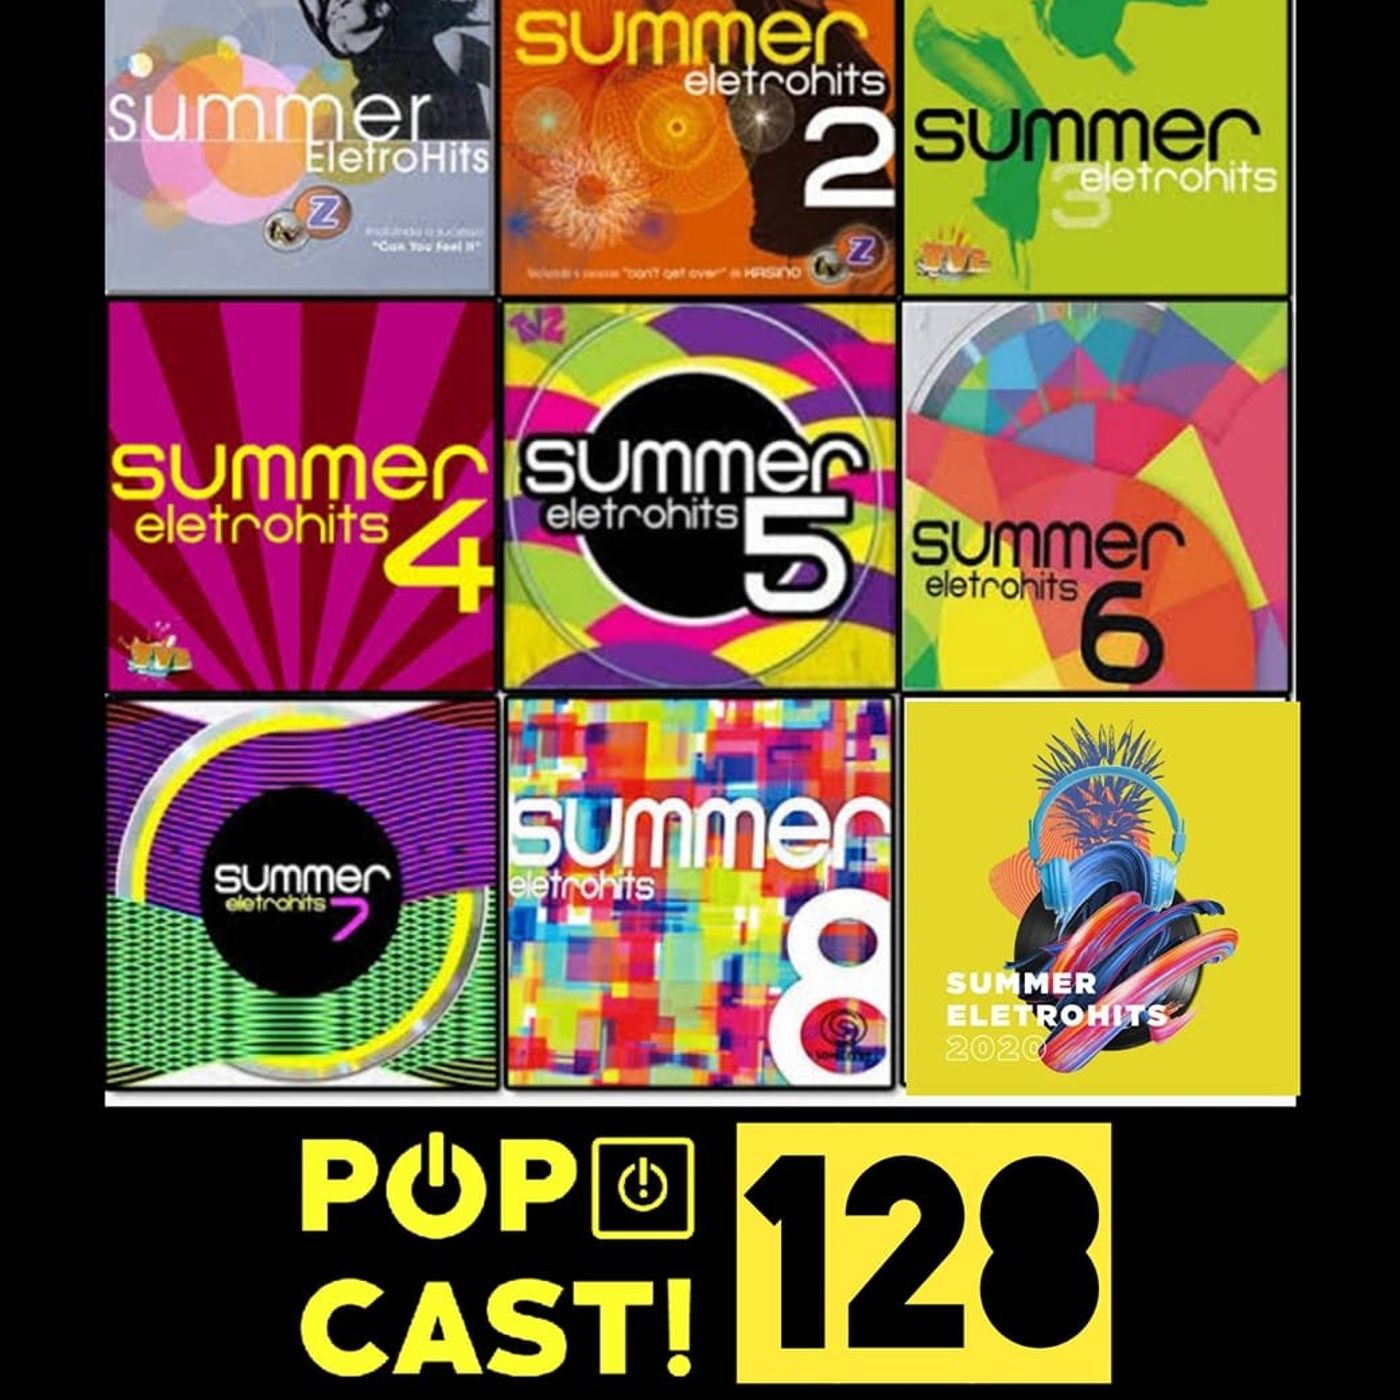 Pópcast! #128 - Summer Eletrohits